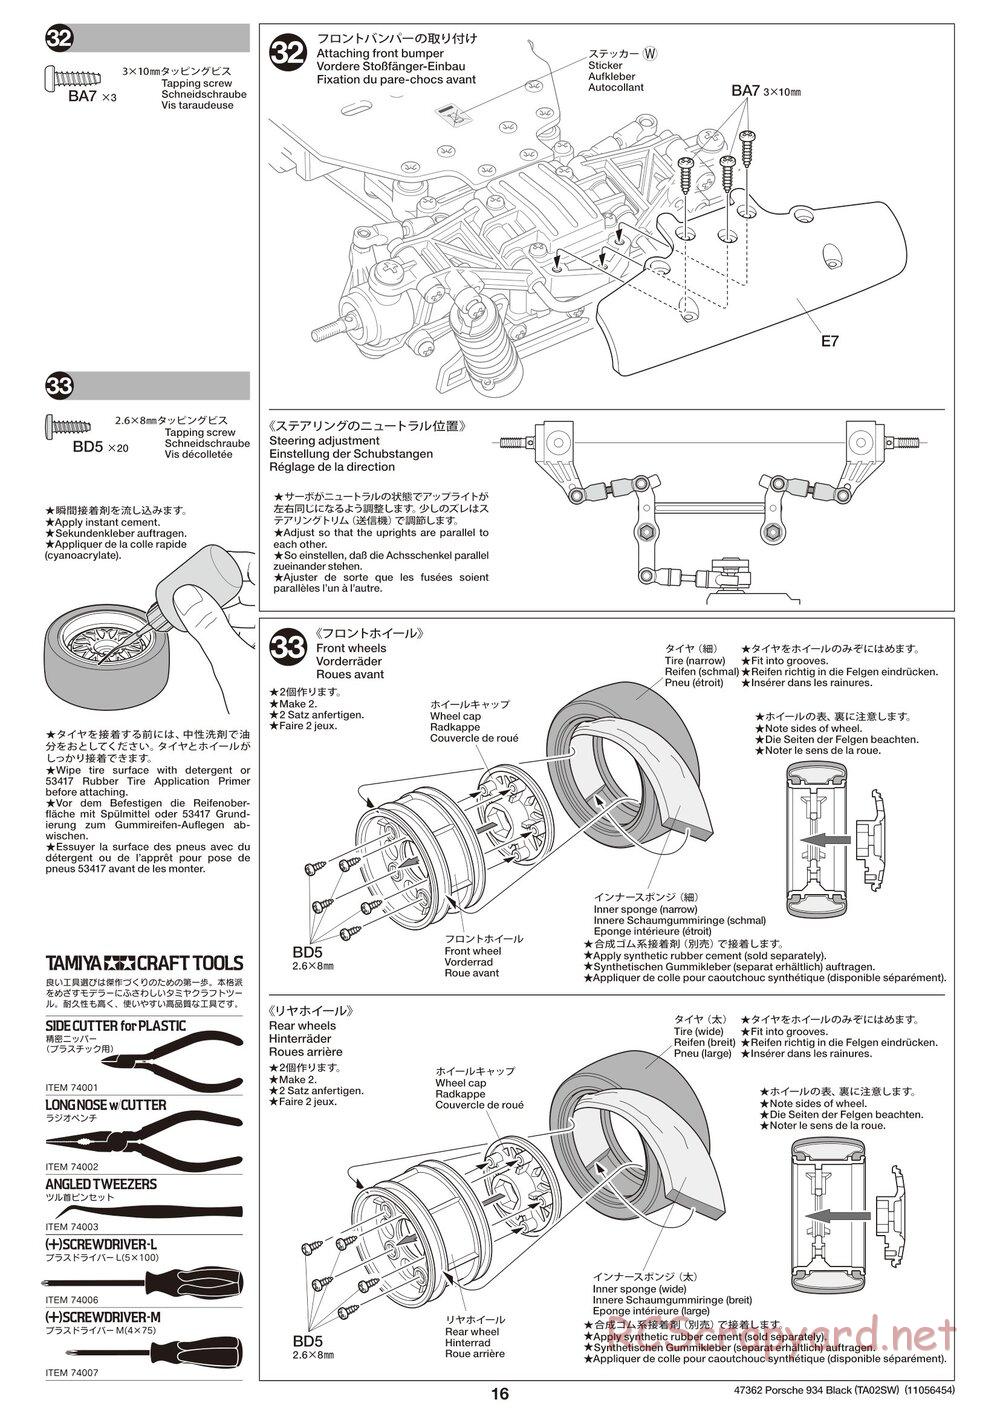 Tamiya - Porsche Turbo RSR Type 934 - Black - TA02SW Chassis - Manual - Page 16